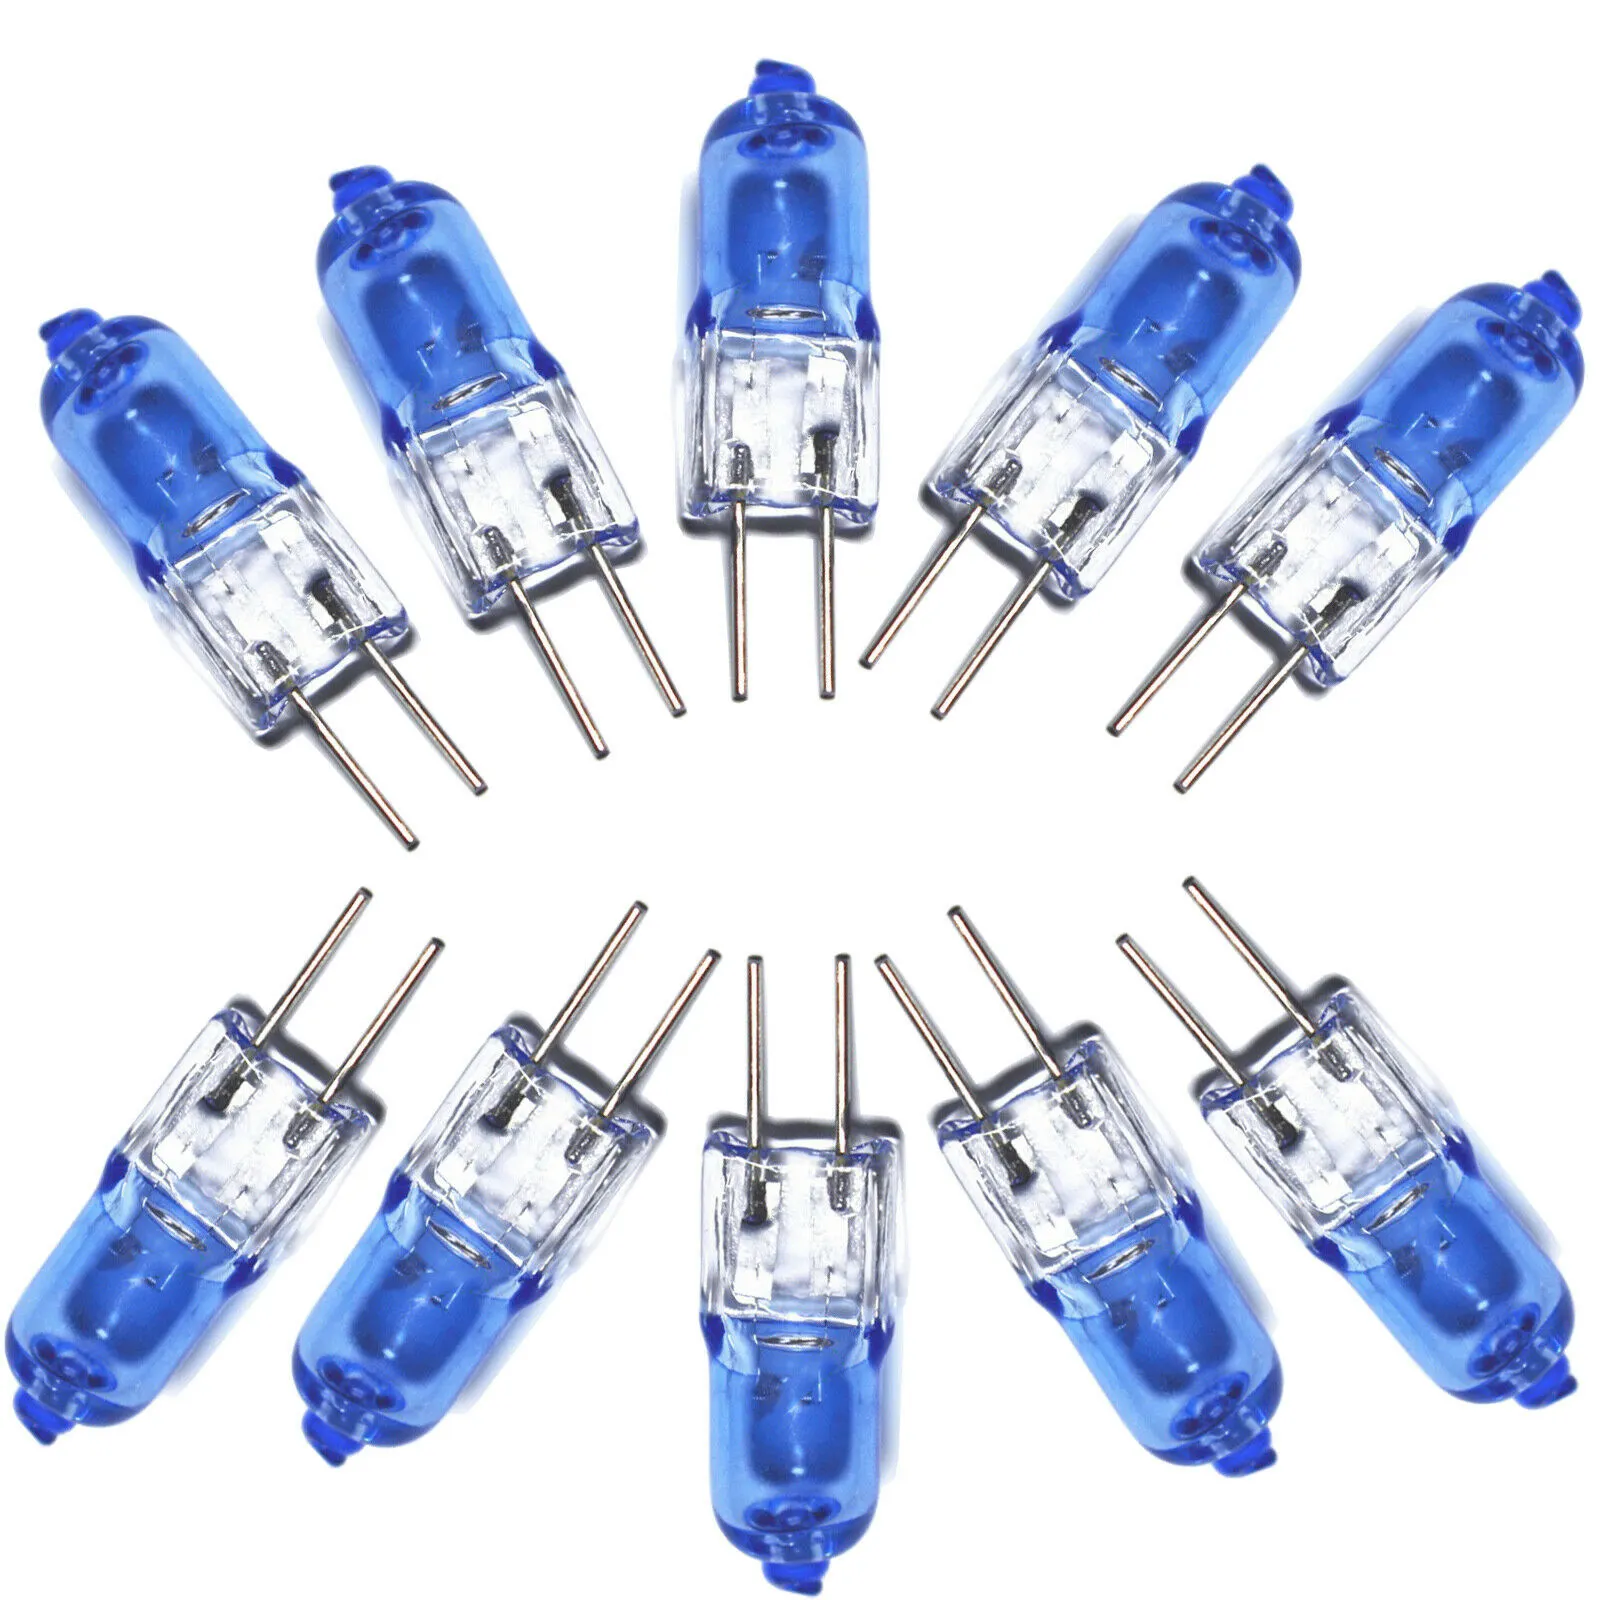 Mini G4 luz halógena cápsula lámpara de bombillas superficie chapado azul 20W 12V